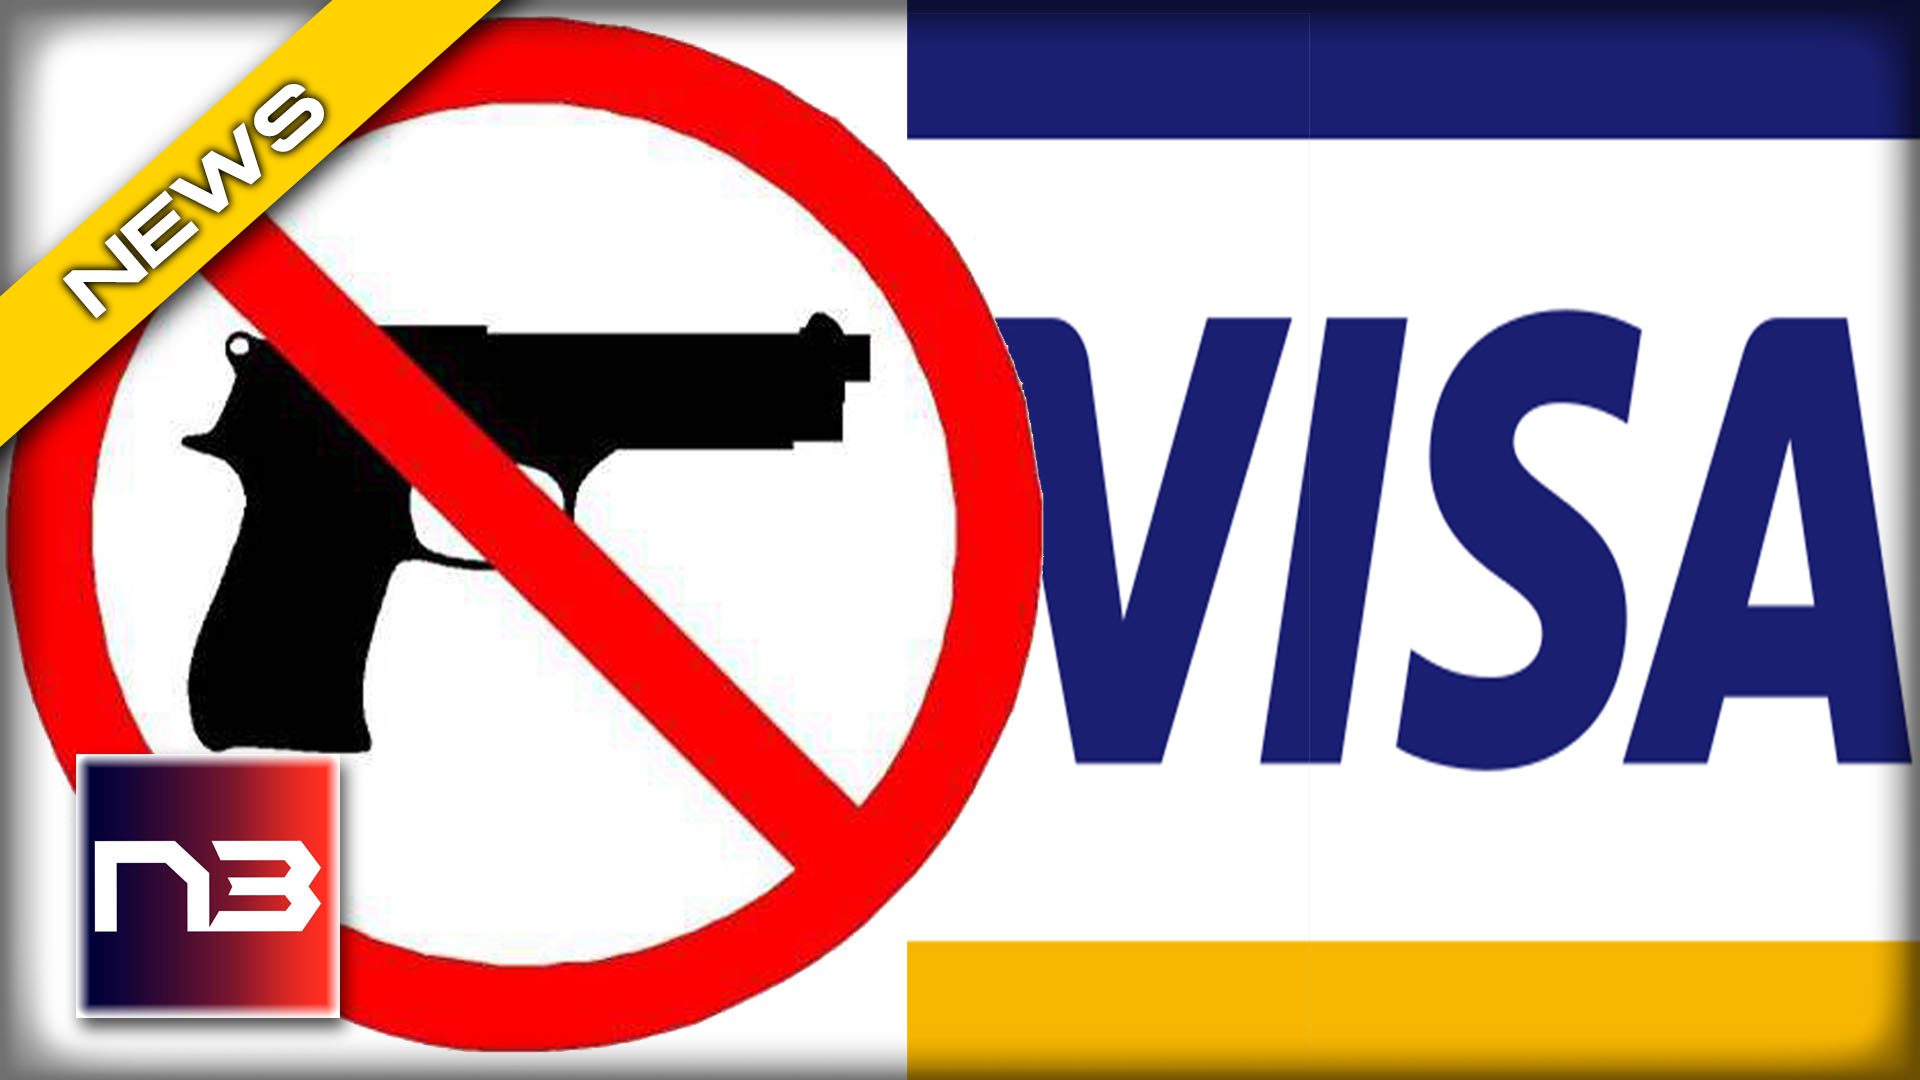 BREAKING: Visa caves to the left, pushes gun control agenda